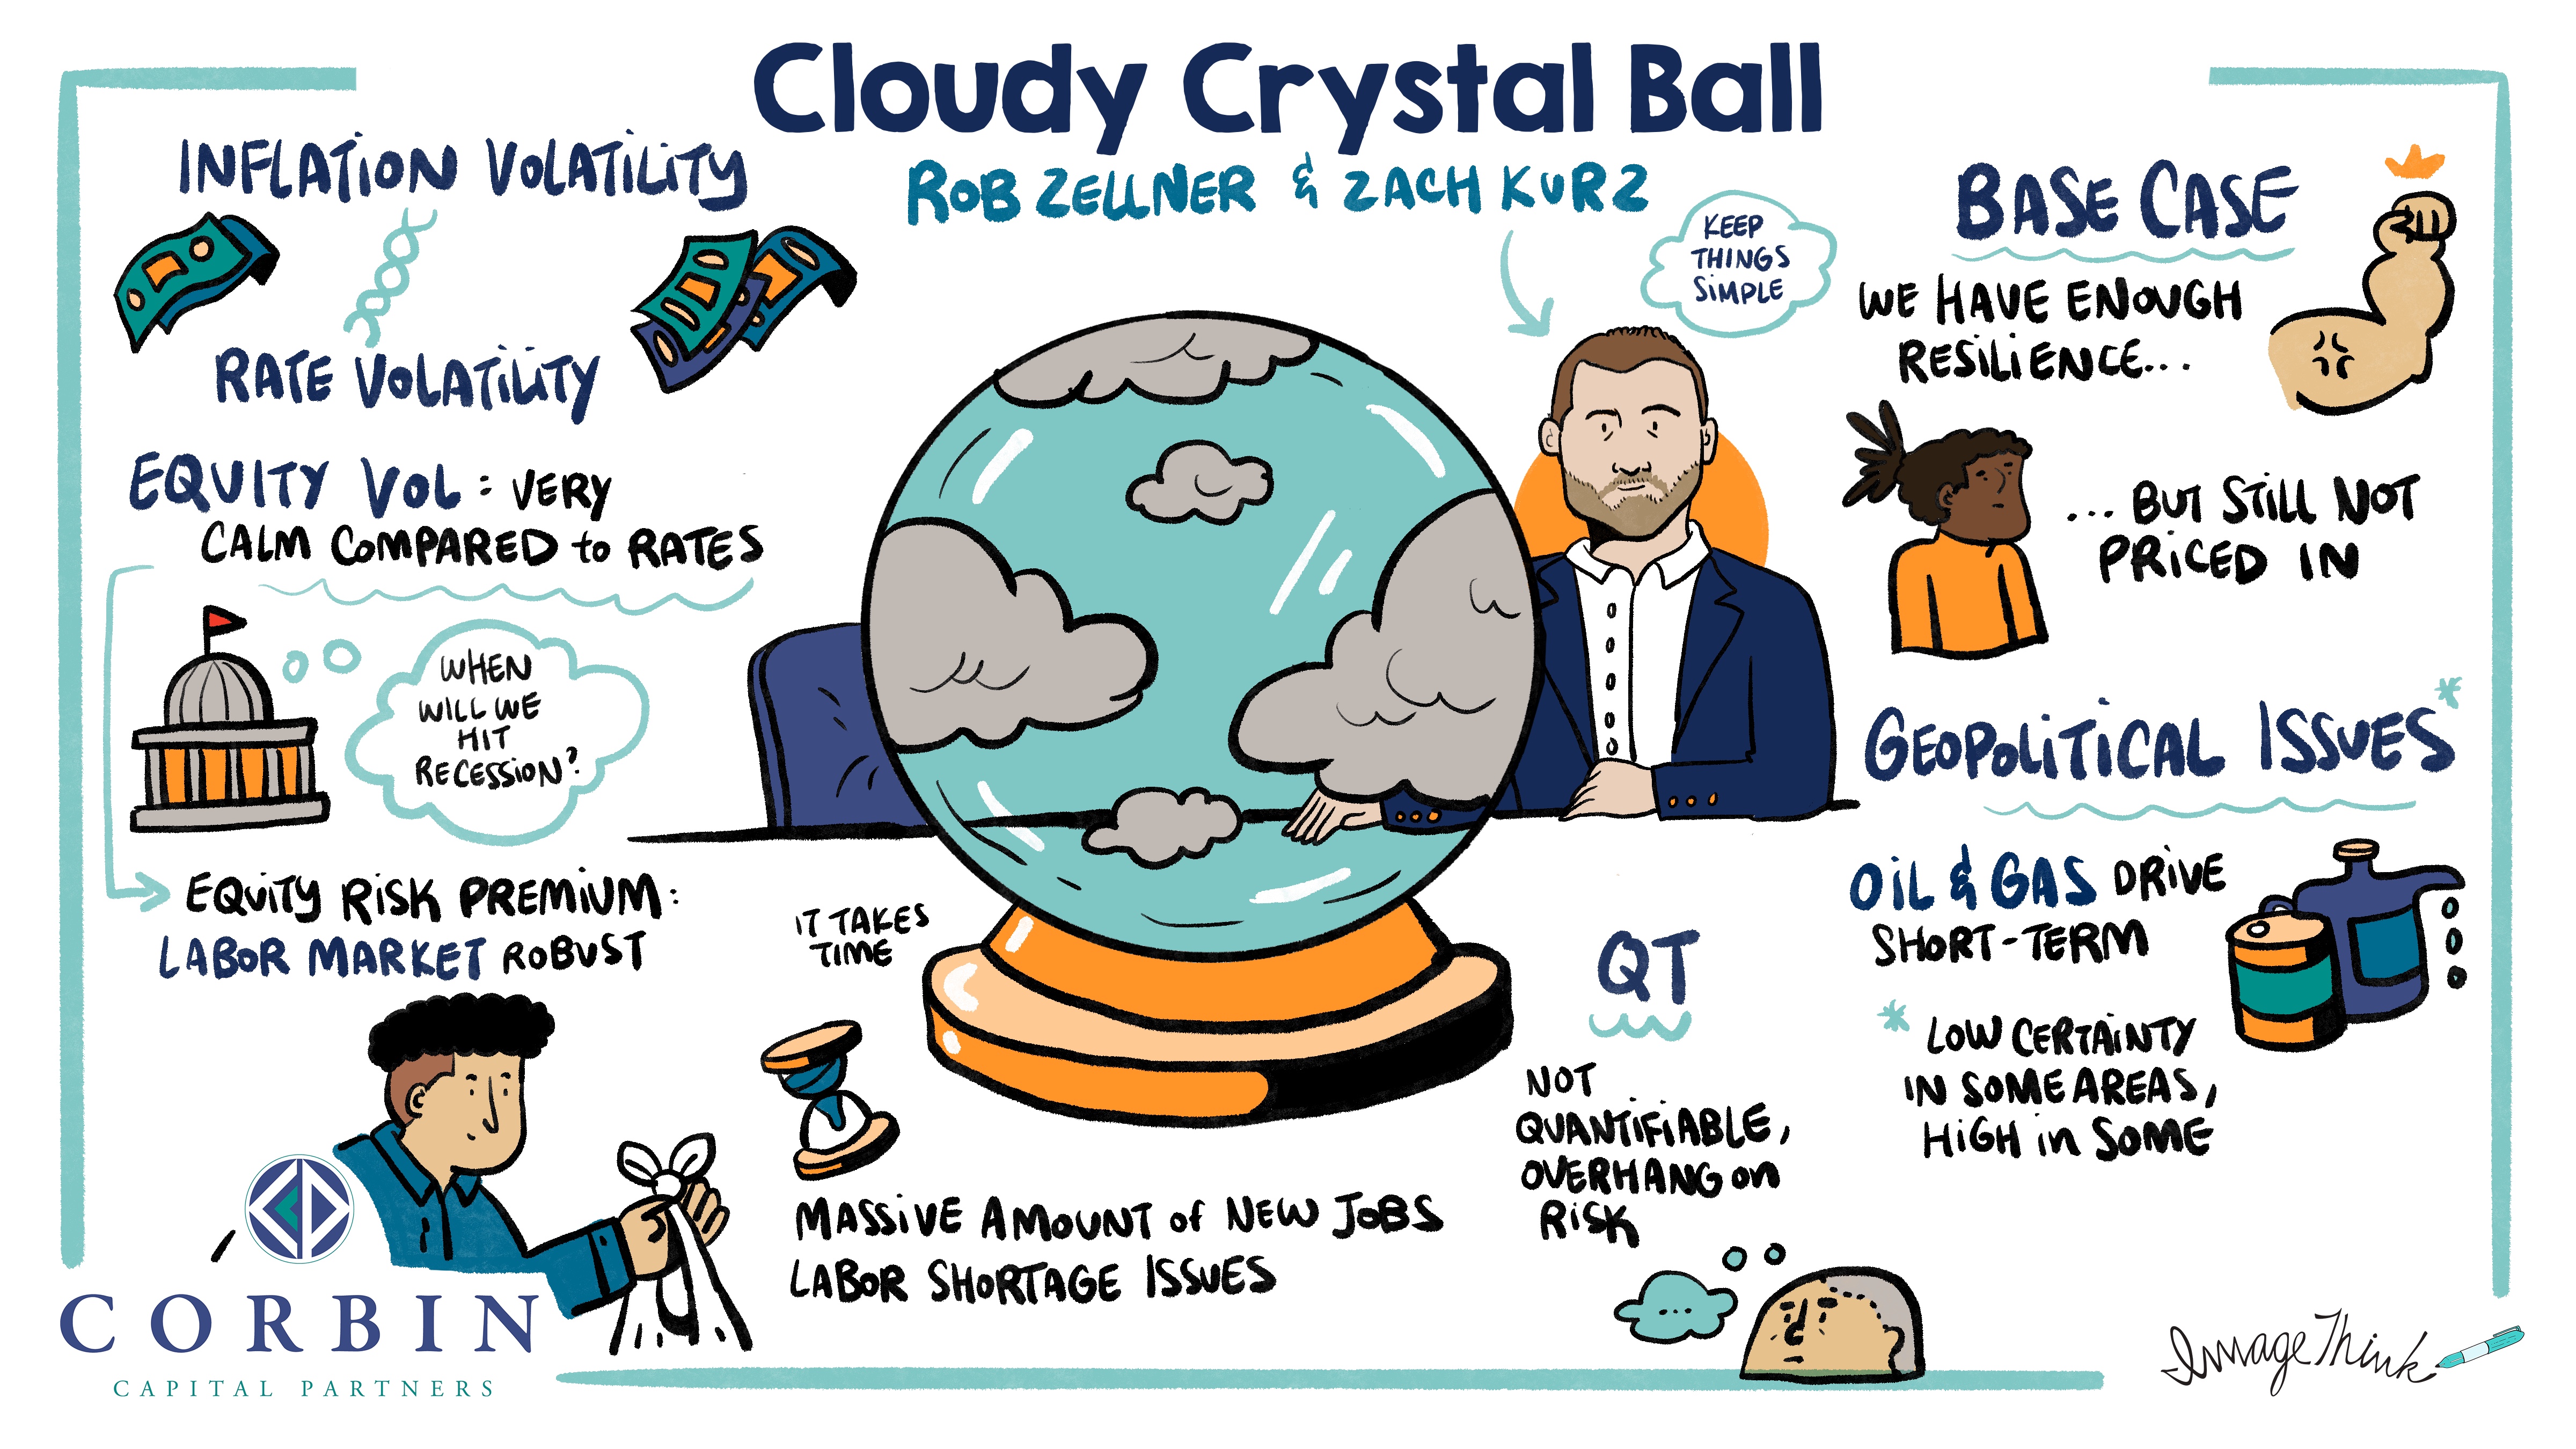 Cloudy Crystal Ball